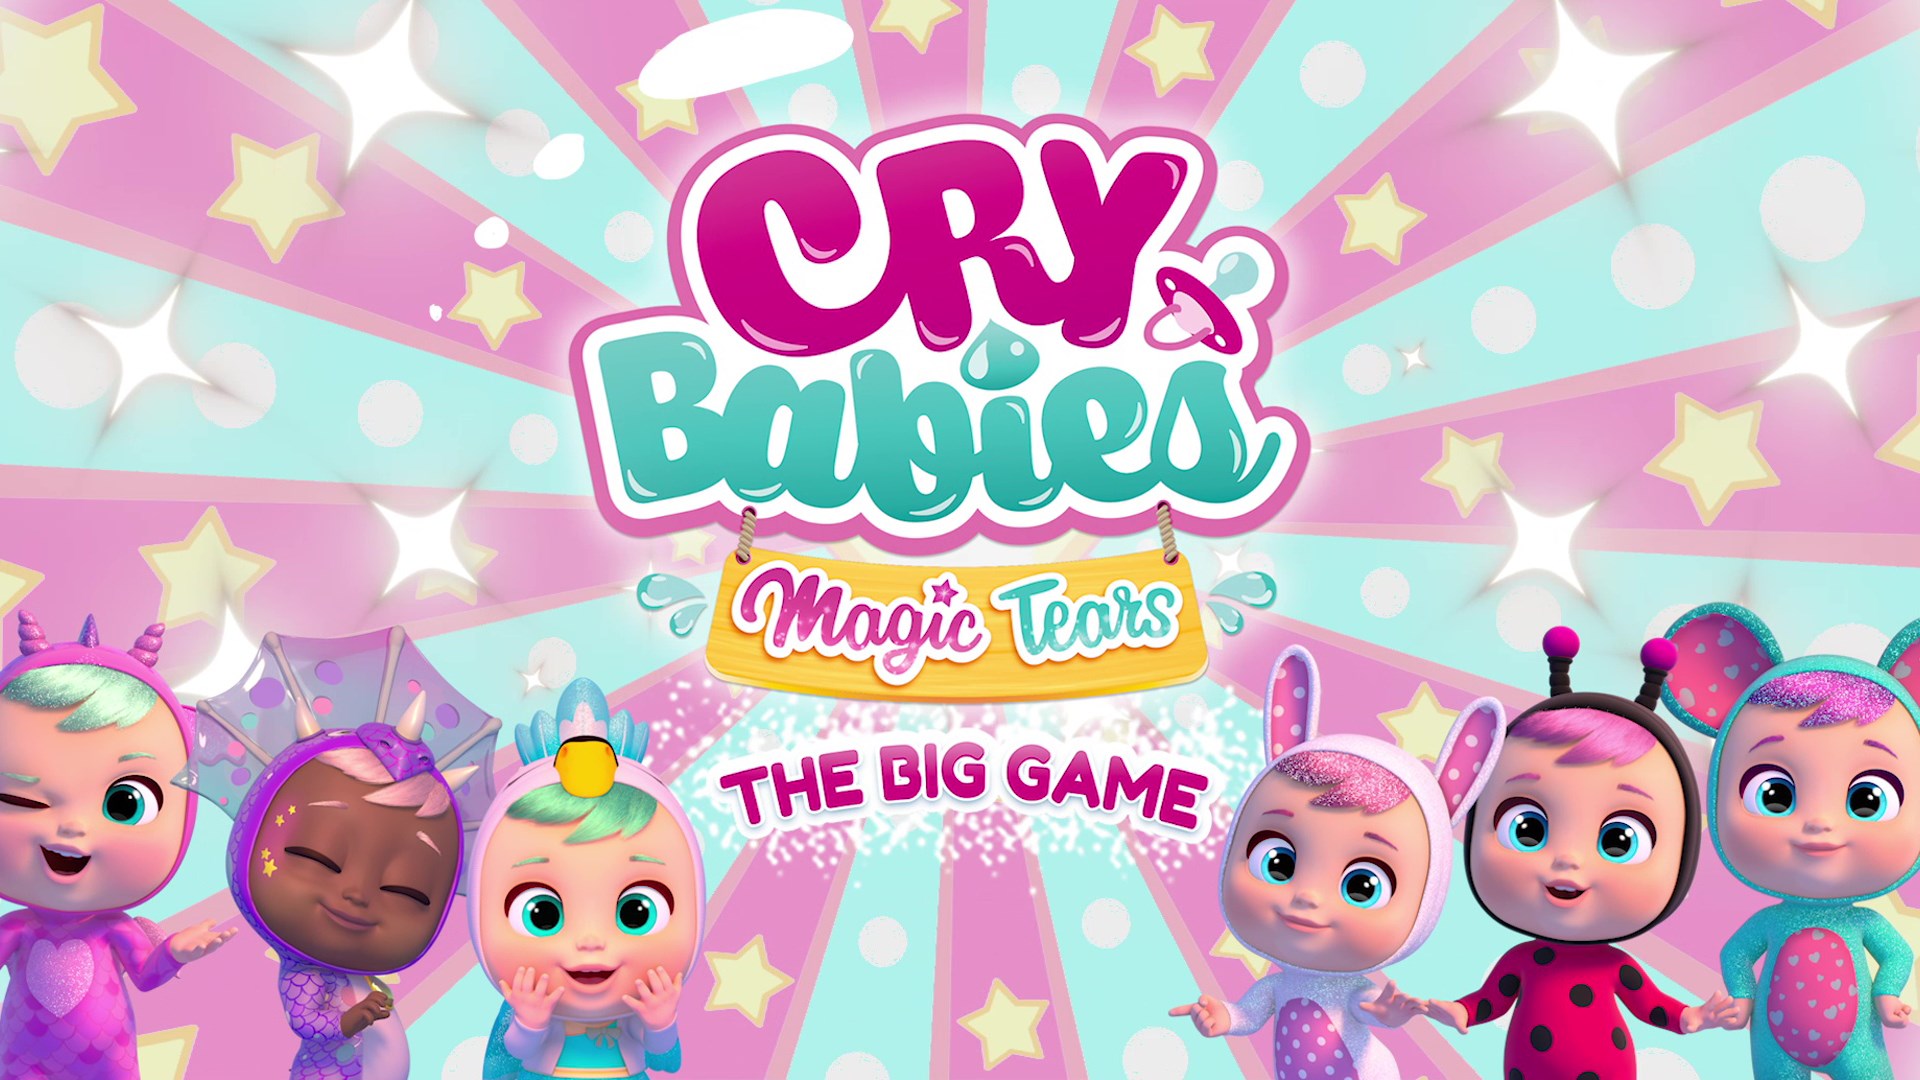 Buy Cry Babies Magic Tears: The Big Game